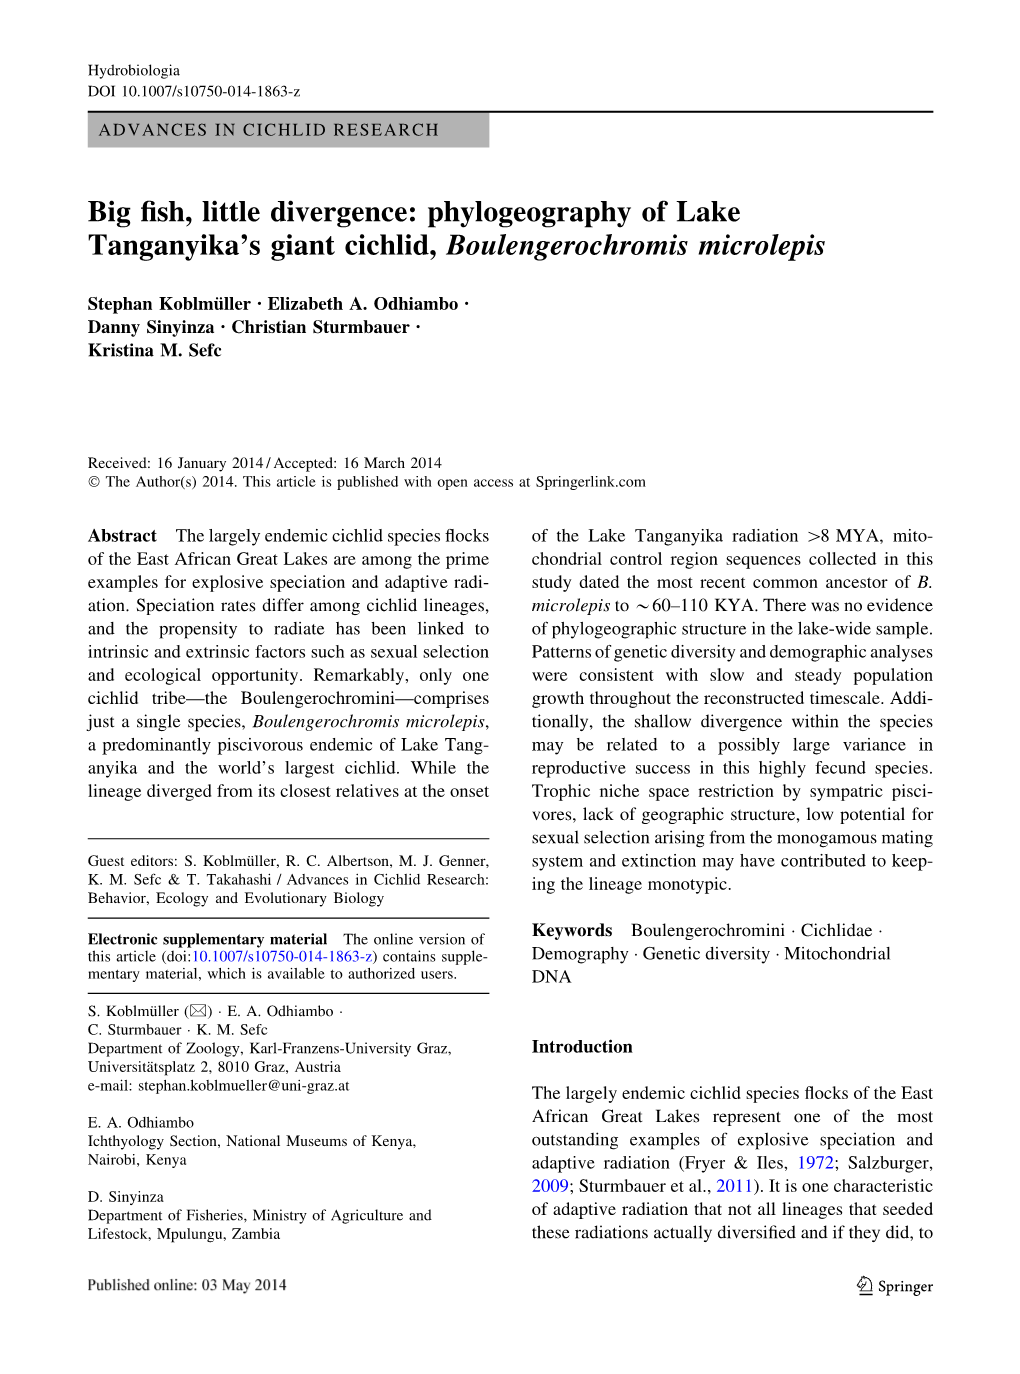 Phylogeography of Lake Tanganyika's Giant Cichlid